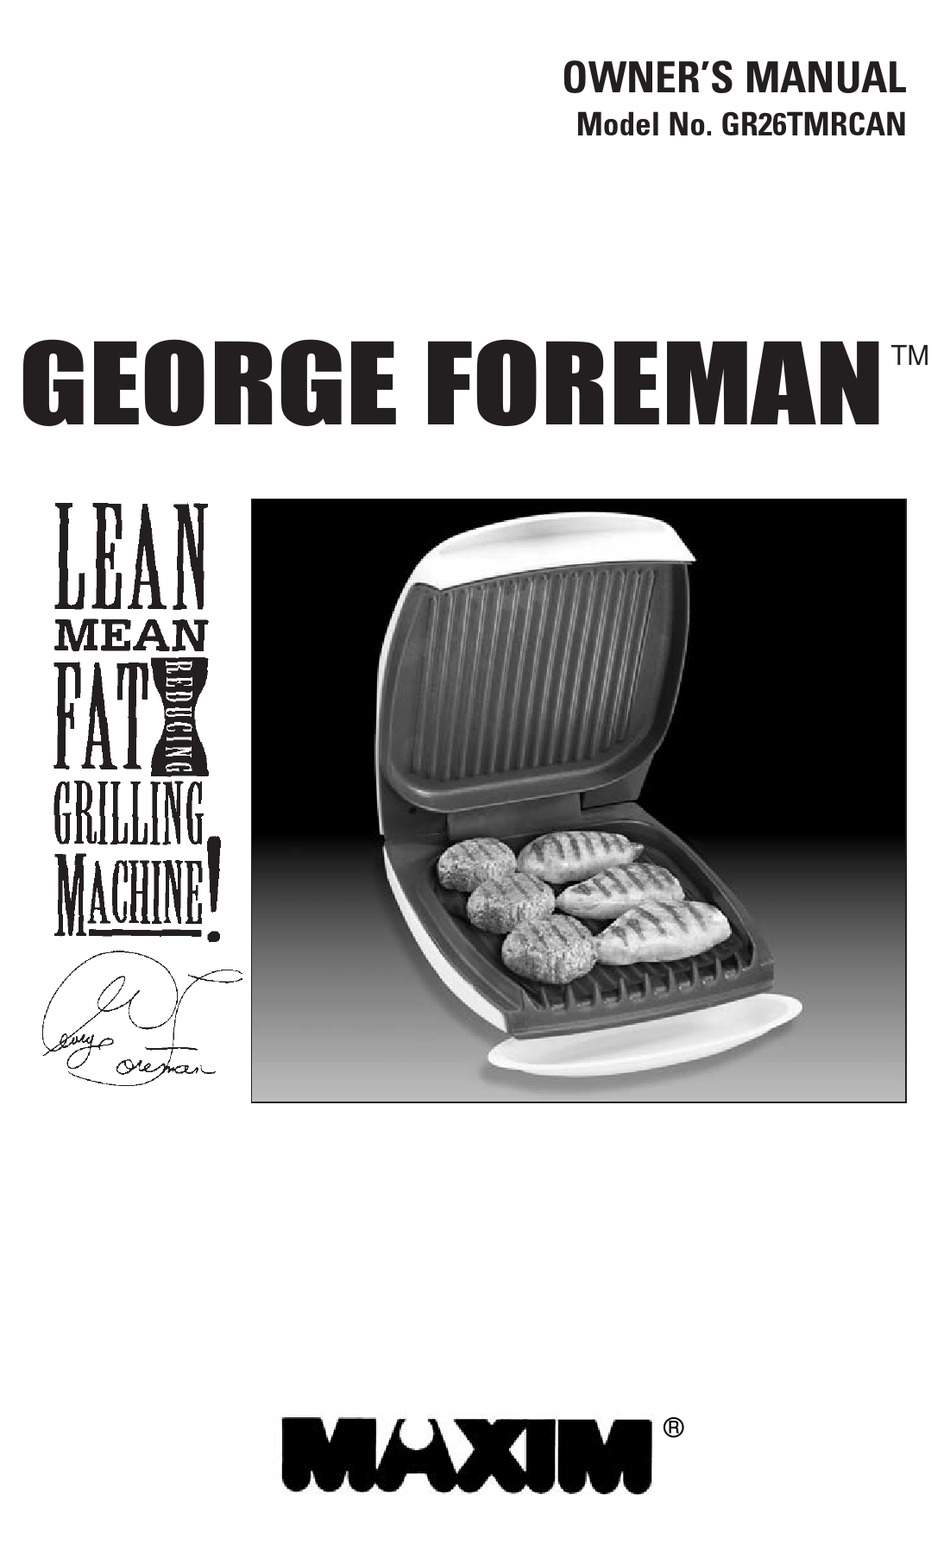 George foreman lean mean fat reducing grilling machine user manual Maxim George Foreman Gr26tmrcan Owner S Manual Pdf Download Manualslib